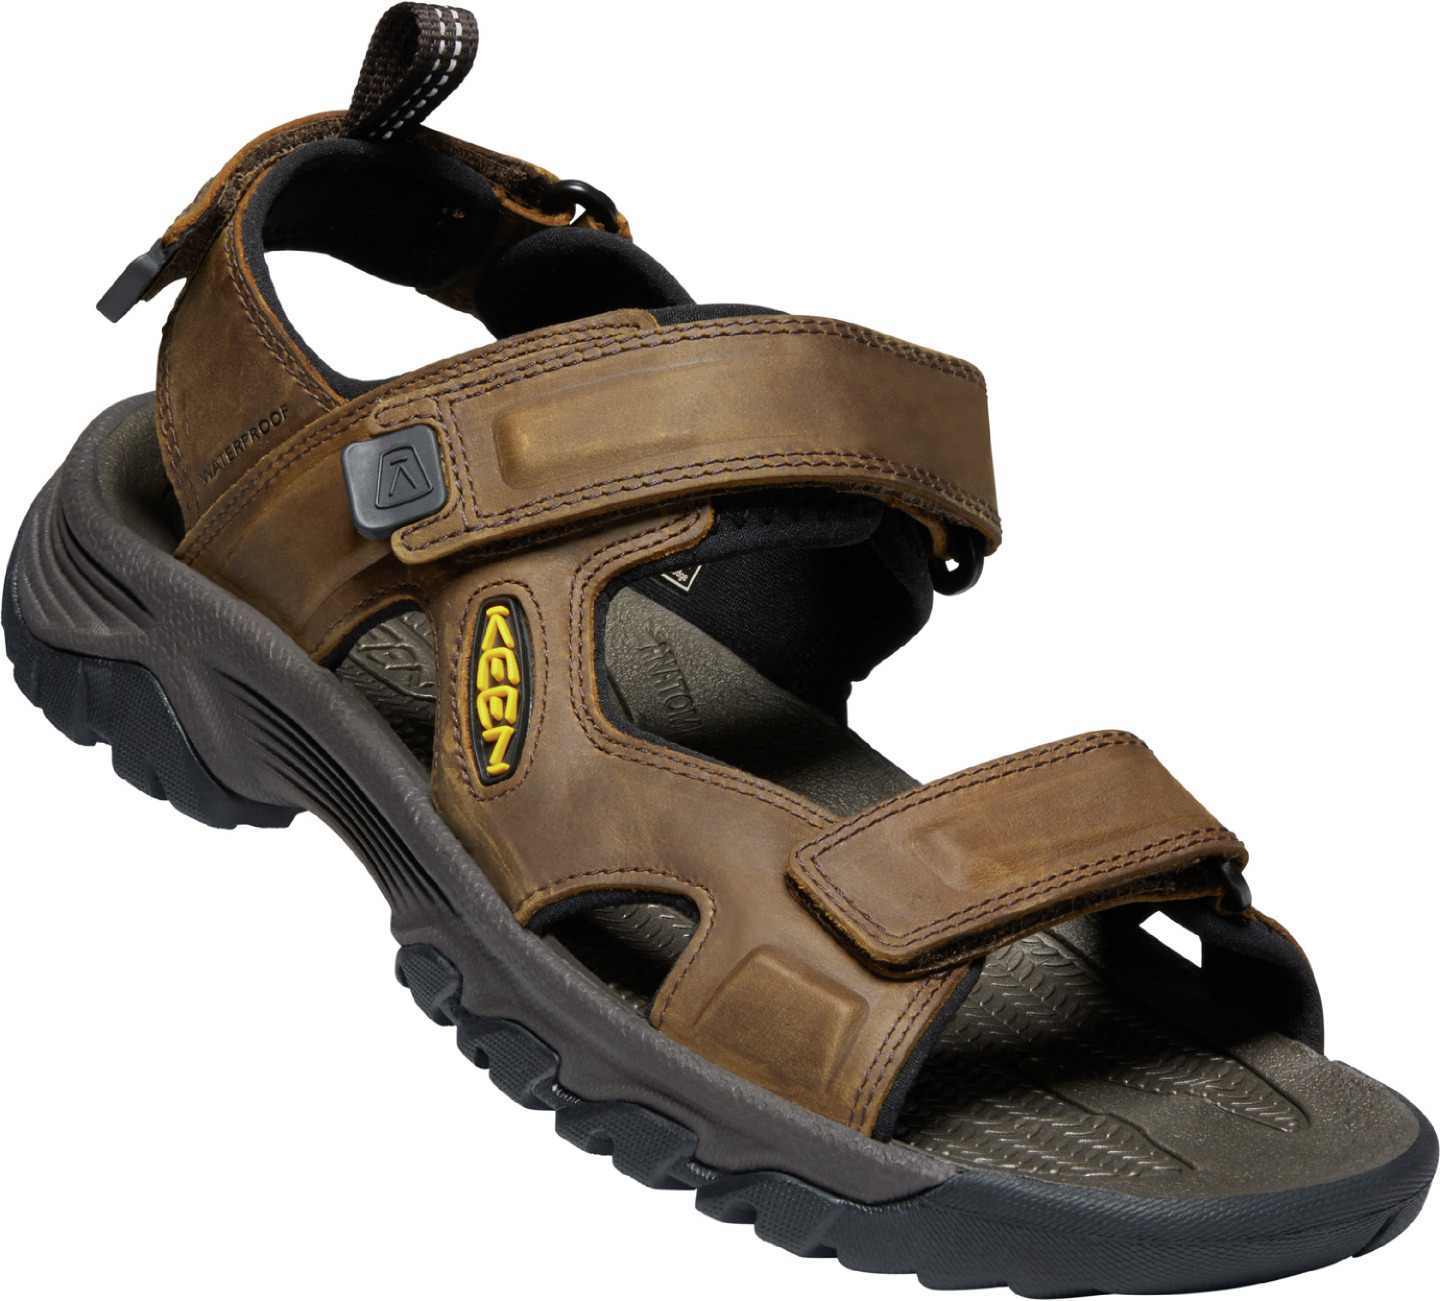 Keen pánské sandály Targhee III Open Toe Sandal Men - Bison/Mulch Barva: bison/mulch, Velikost: 13 UK (47,5 EU / 32 cm)